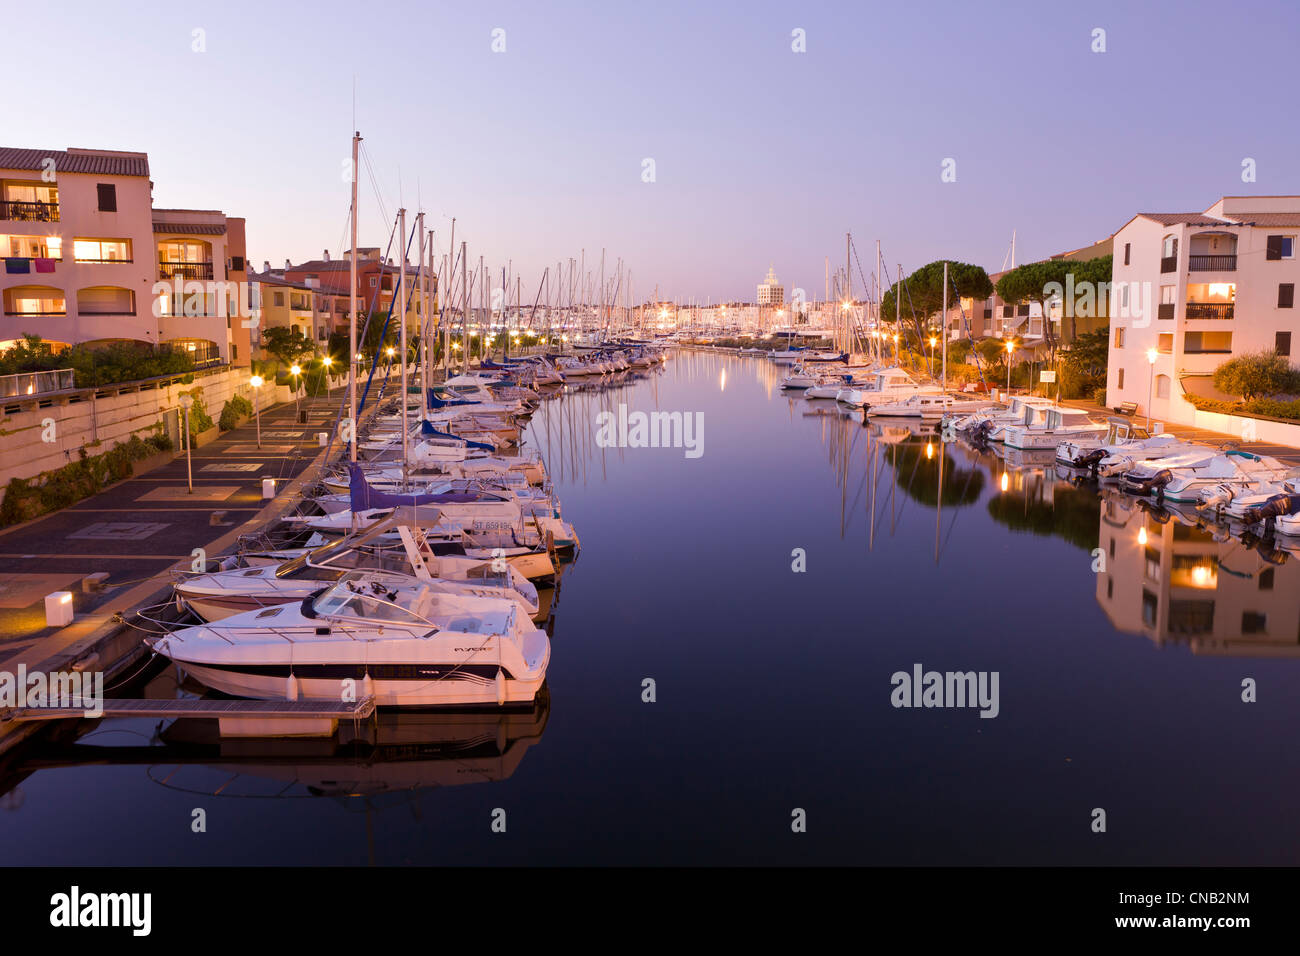 France, Herault, Le Cap d'Agde, the marina Stock Photo